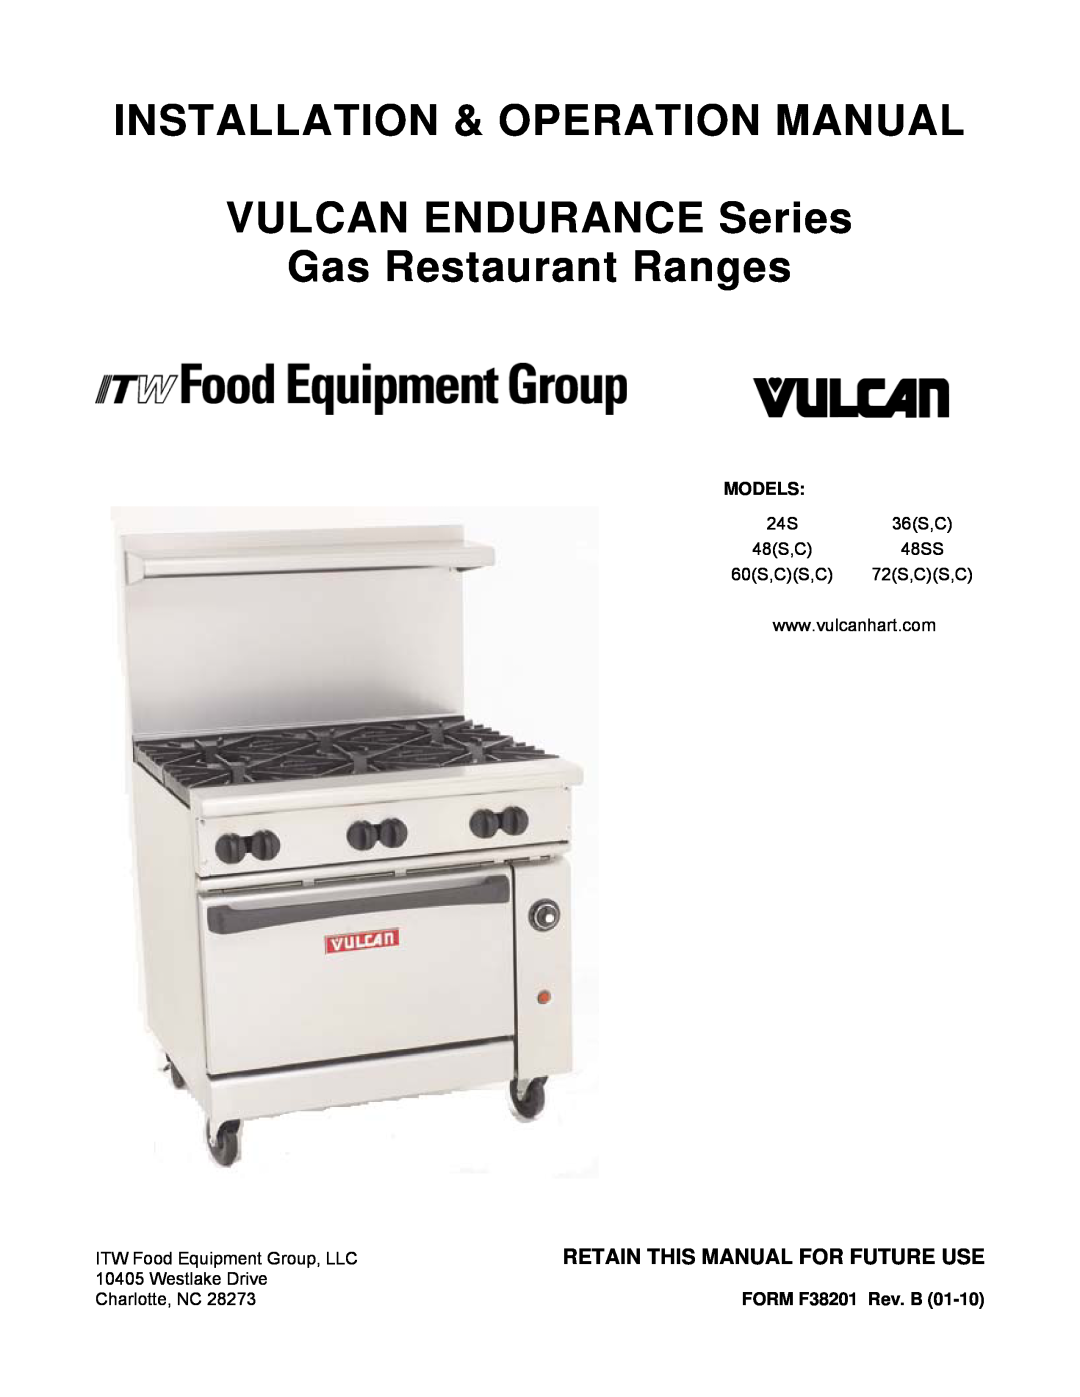 Vulcan-Hart 48(S,C), 24S operation manual Installation & Operation Manual, VULCAN ENDURANCE Series Gas Restaurant Ranges 